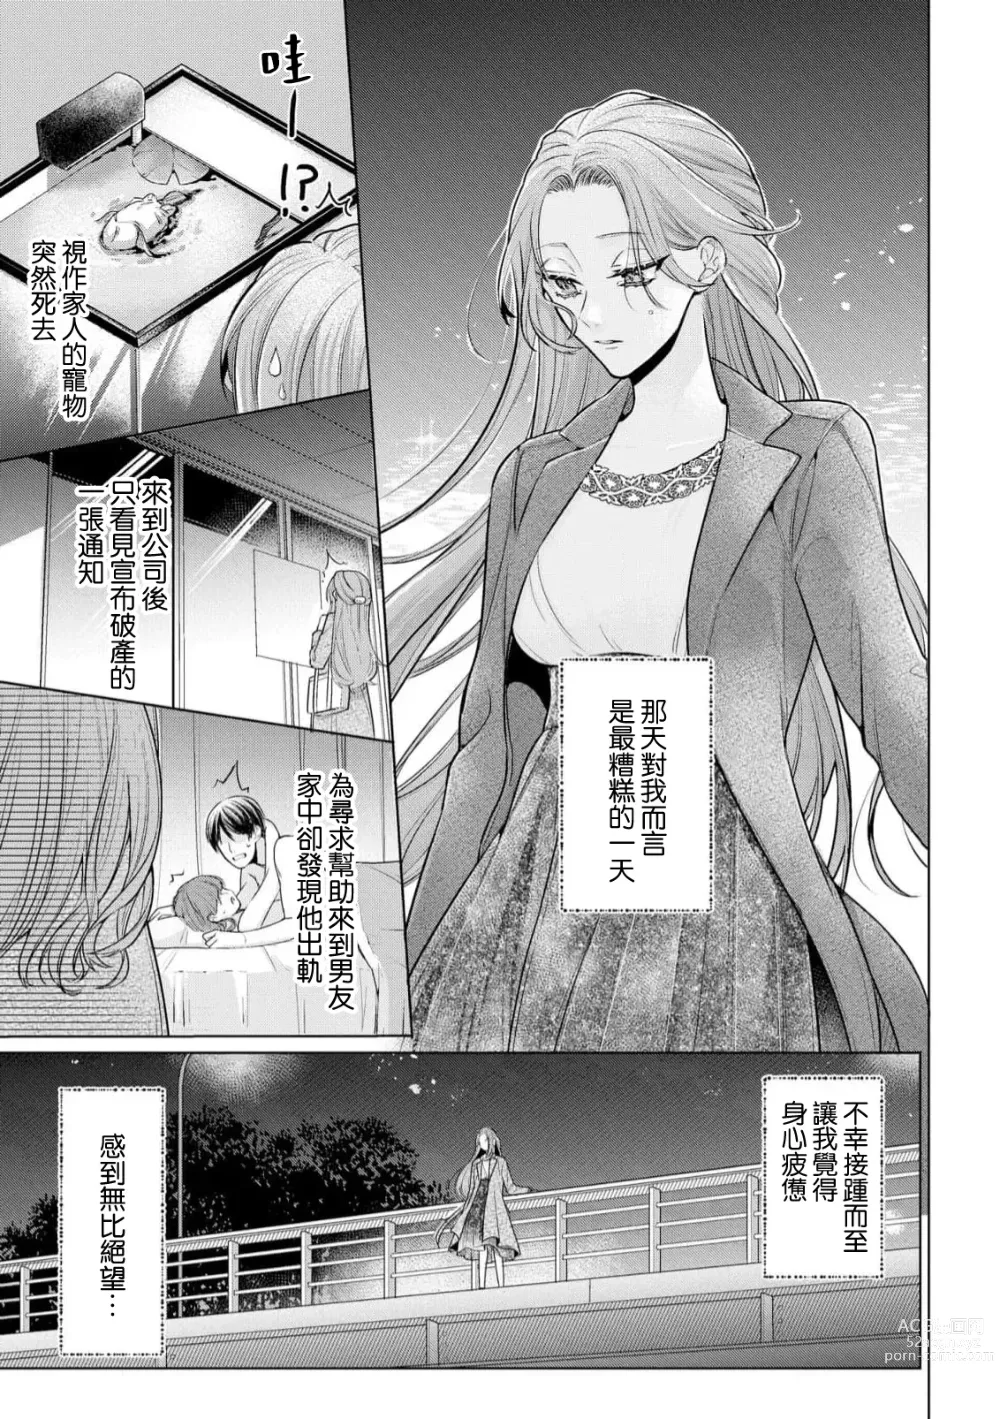 Page 4 of manga 性格恶劣的黑道男对不幸的我格外迷恋